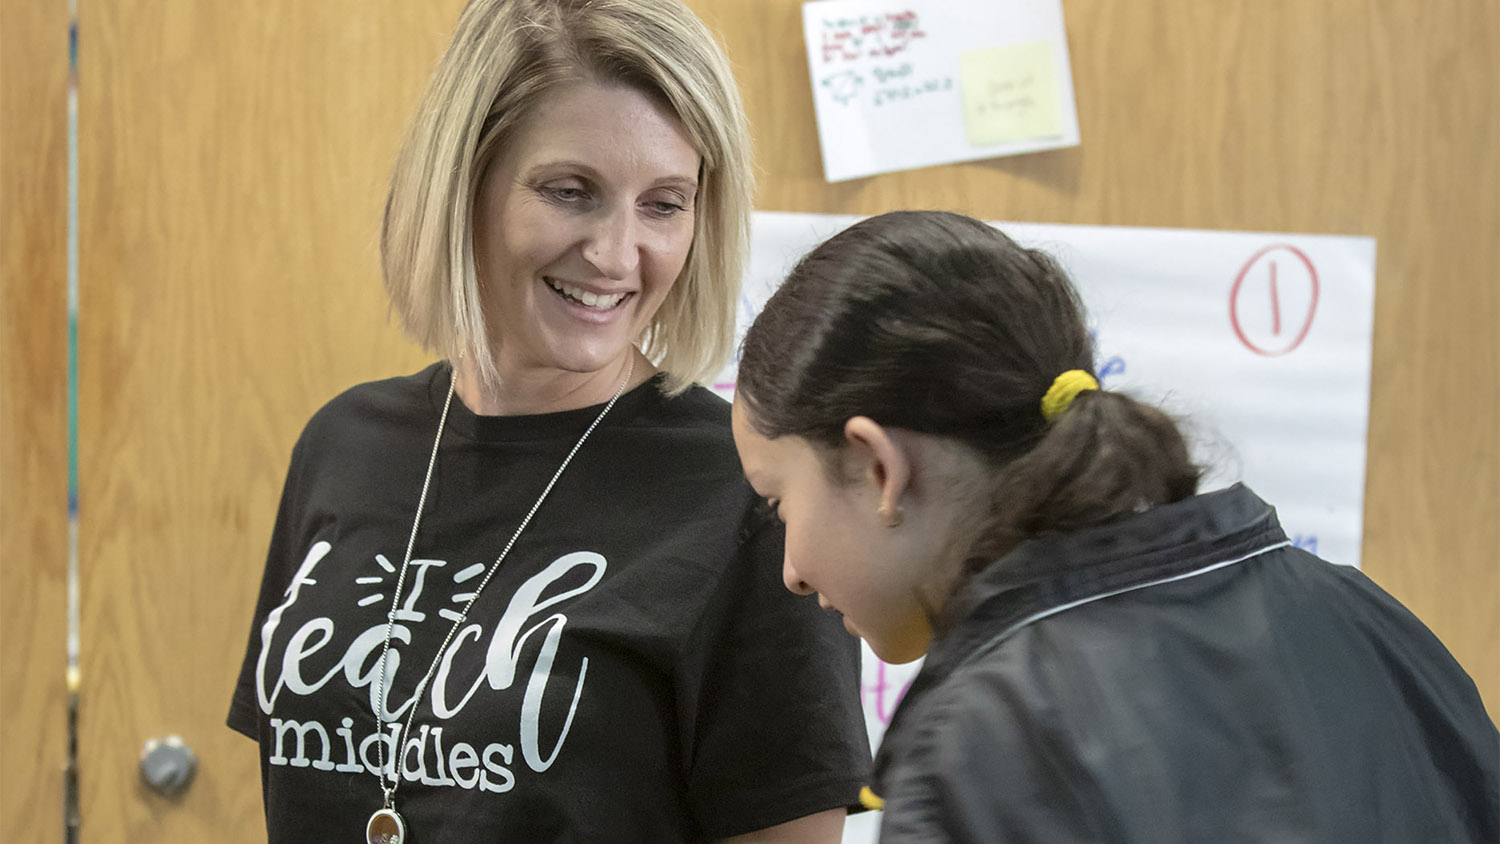 Teacher with student in a classroom. Teacher wears a black t-shirt with "I Teach Middles" messaging.